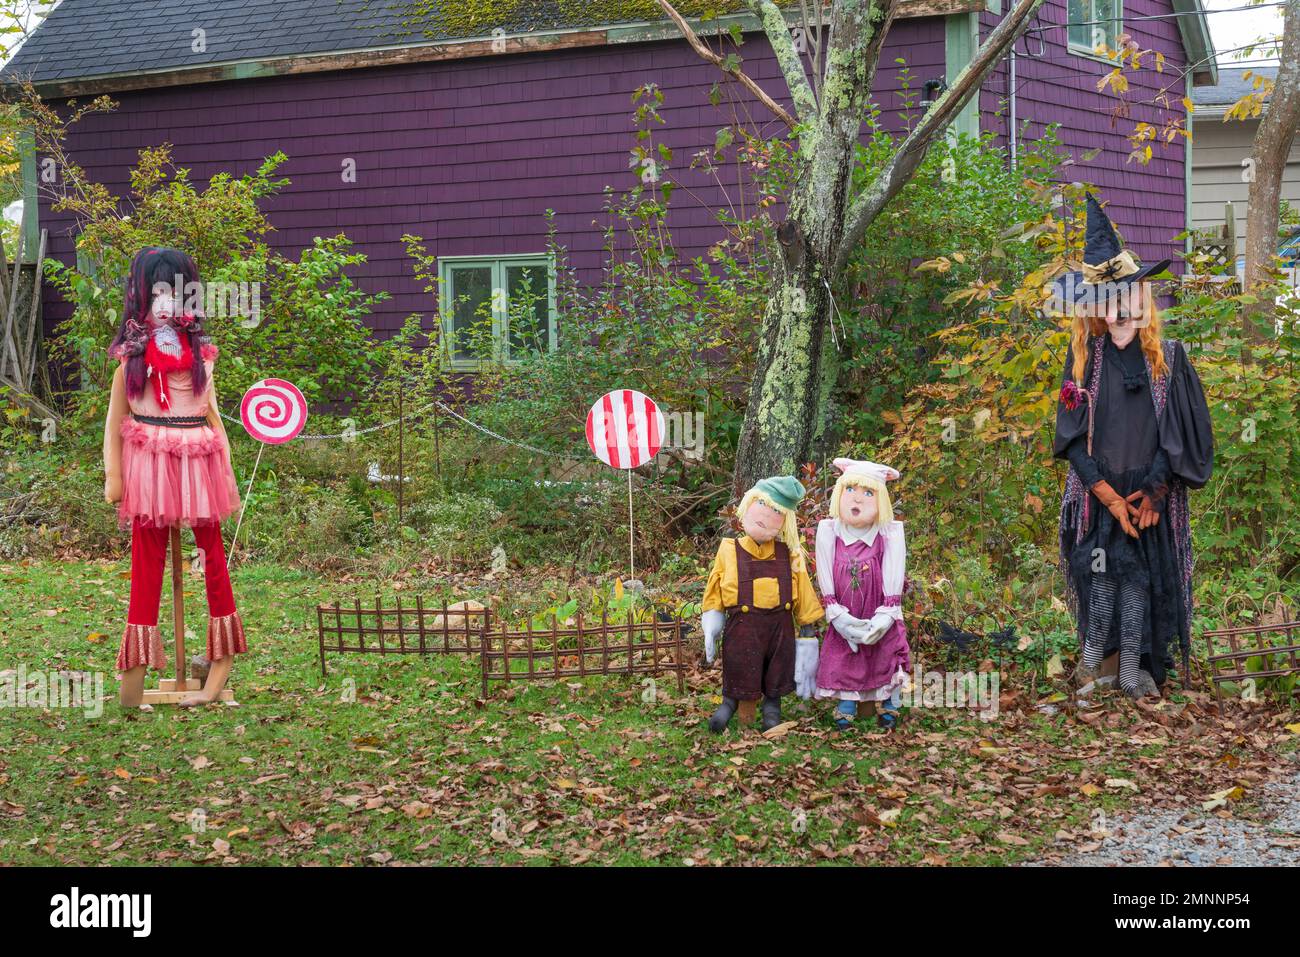 Figures at the Scarecrow Festival in Mahone Bay, Nova Scotia, Canada. Stock Photo